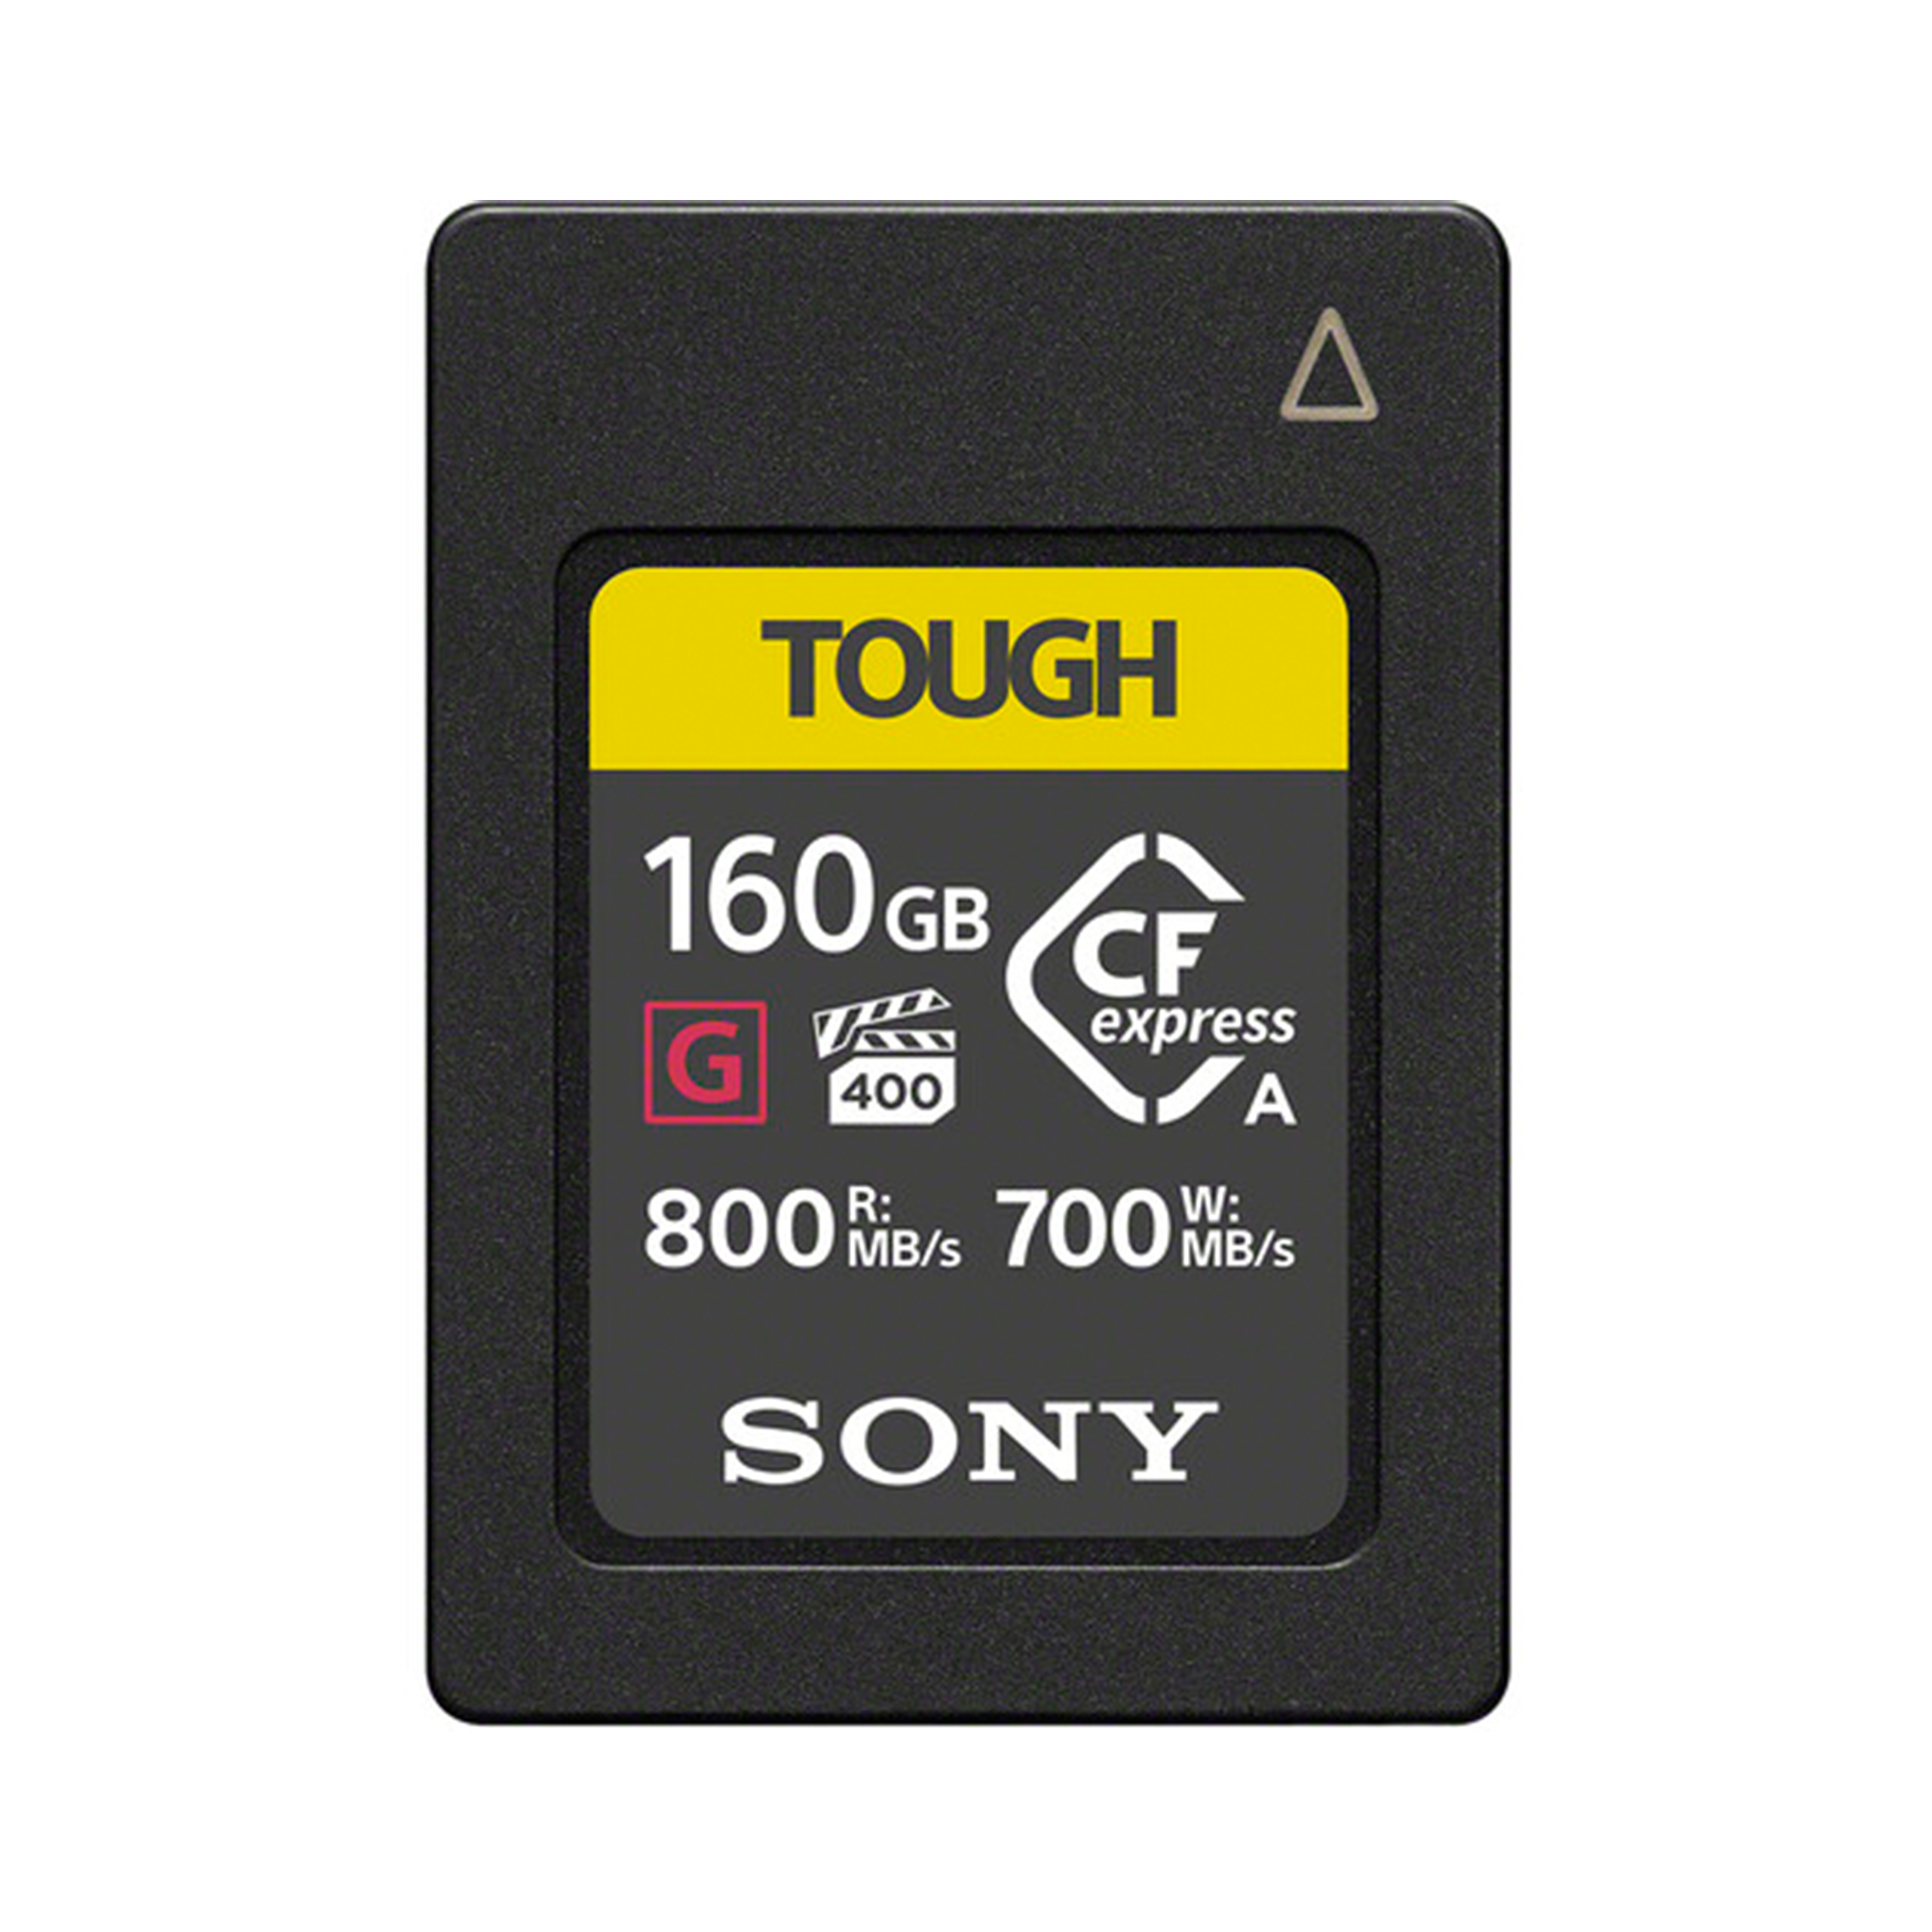 Sony Tough CFexpress | Henry's